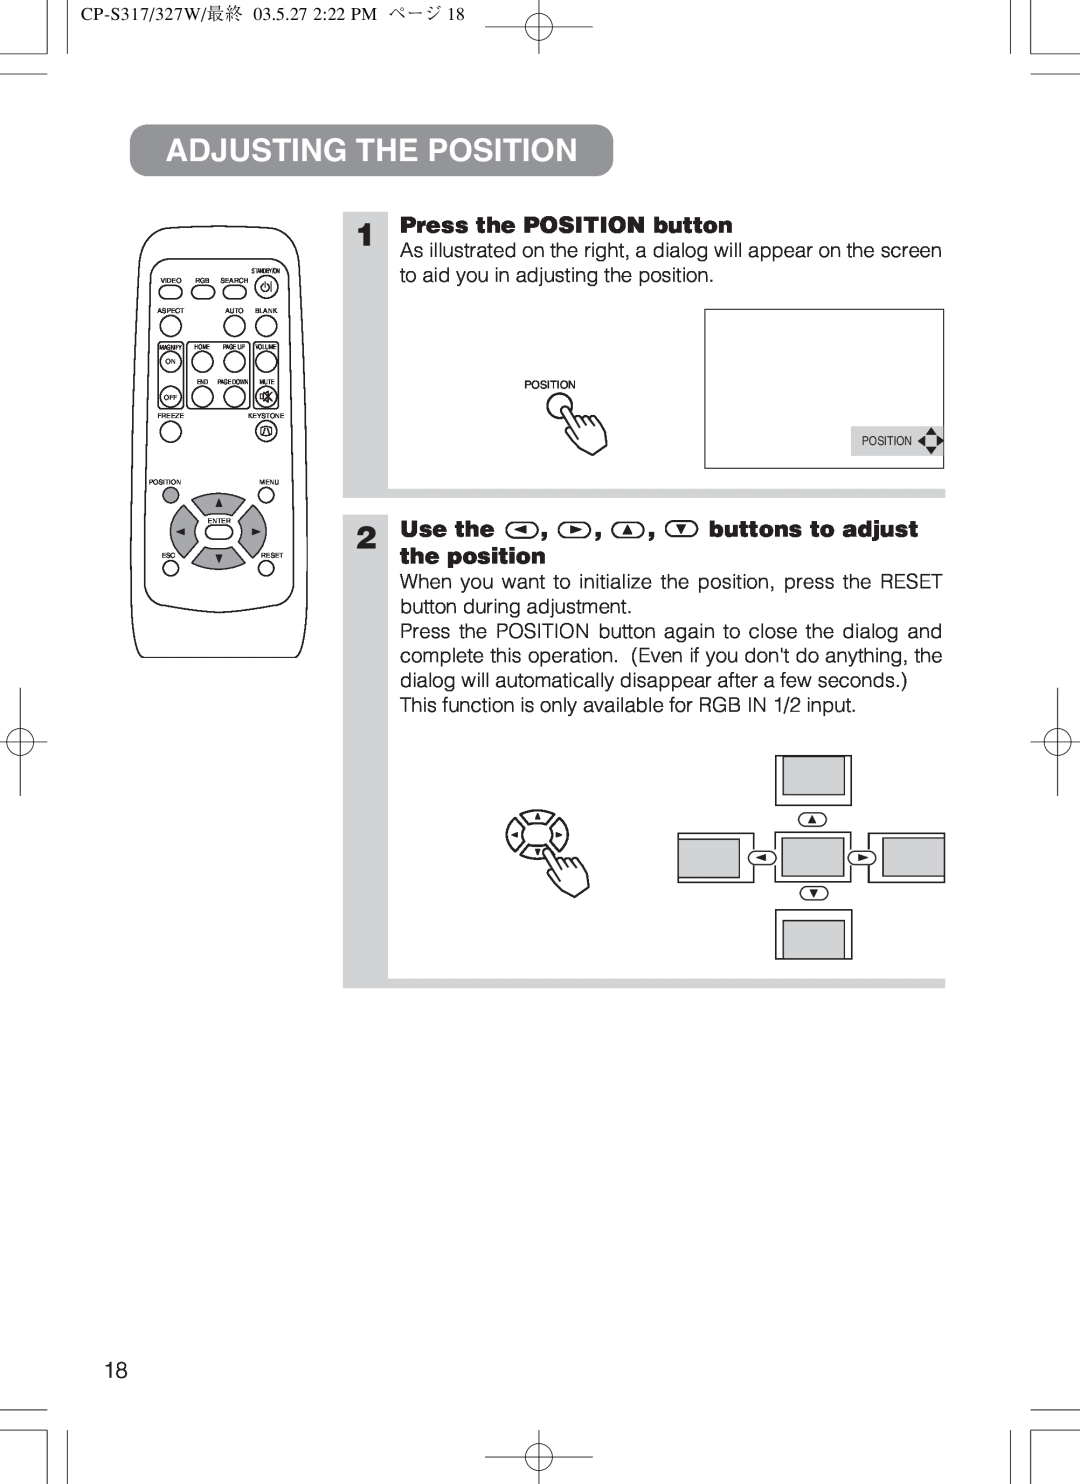 Hitachi cp-s318 user manual Adjusting The Position, Press the POSITION button, Use the, the position, buttons to adjust 